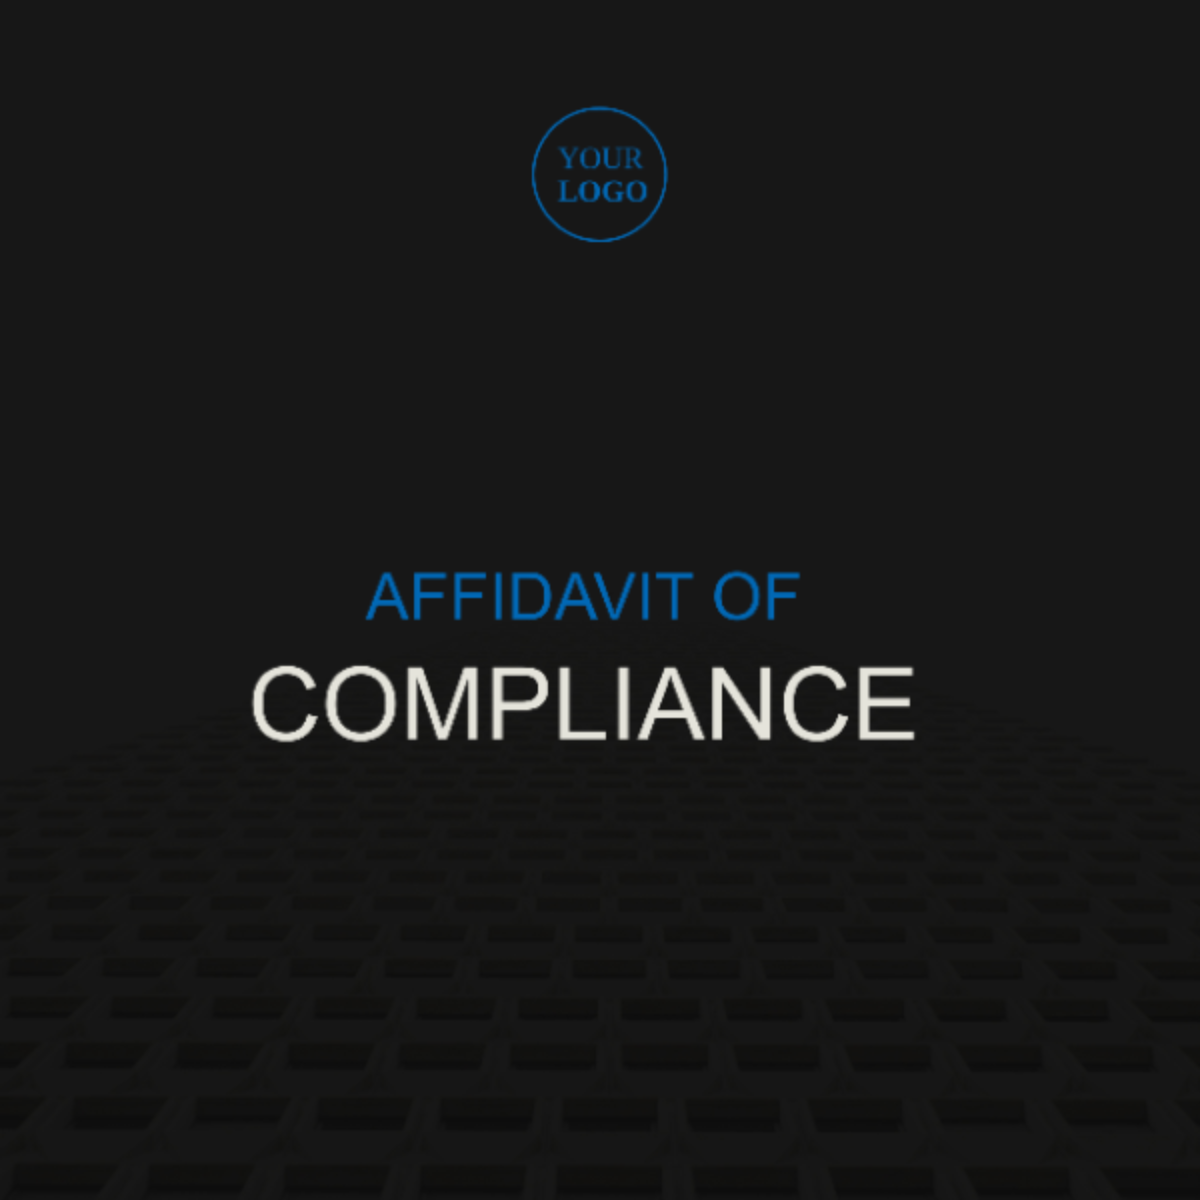 Affidavit of Compliance Template